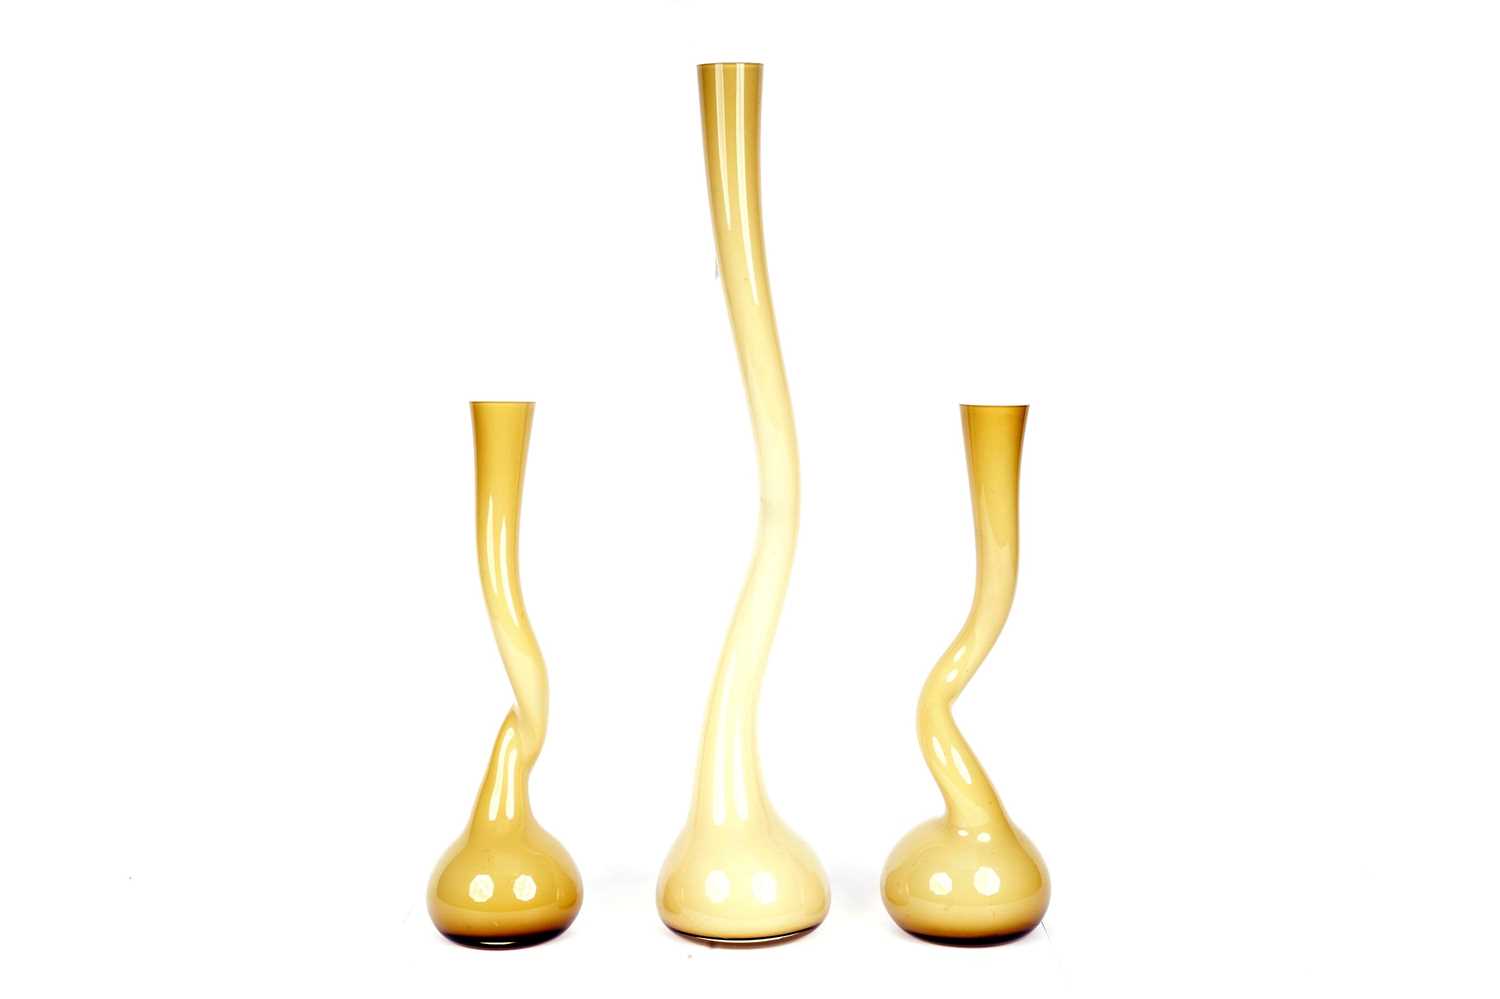 Three William Mason Swing vases